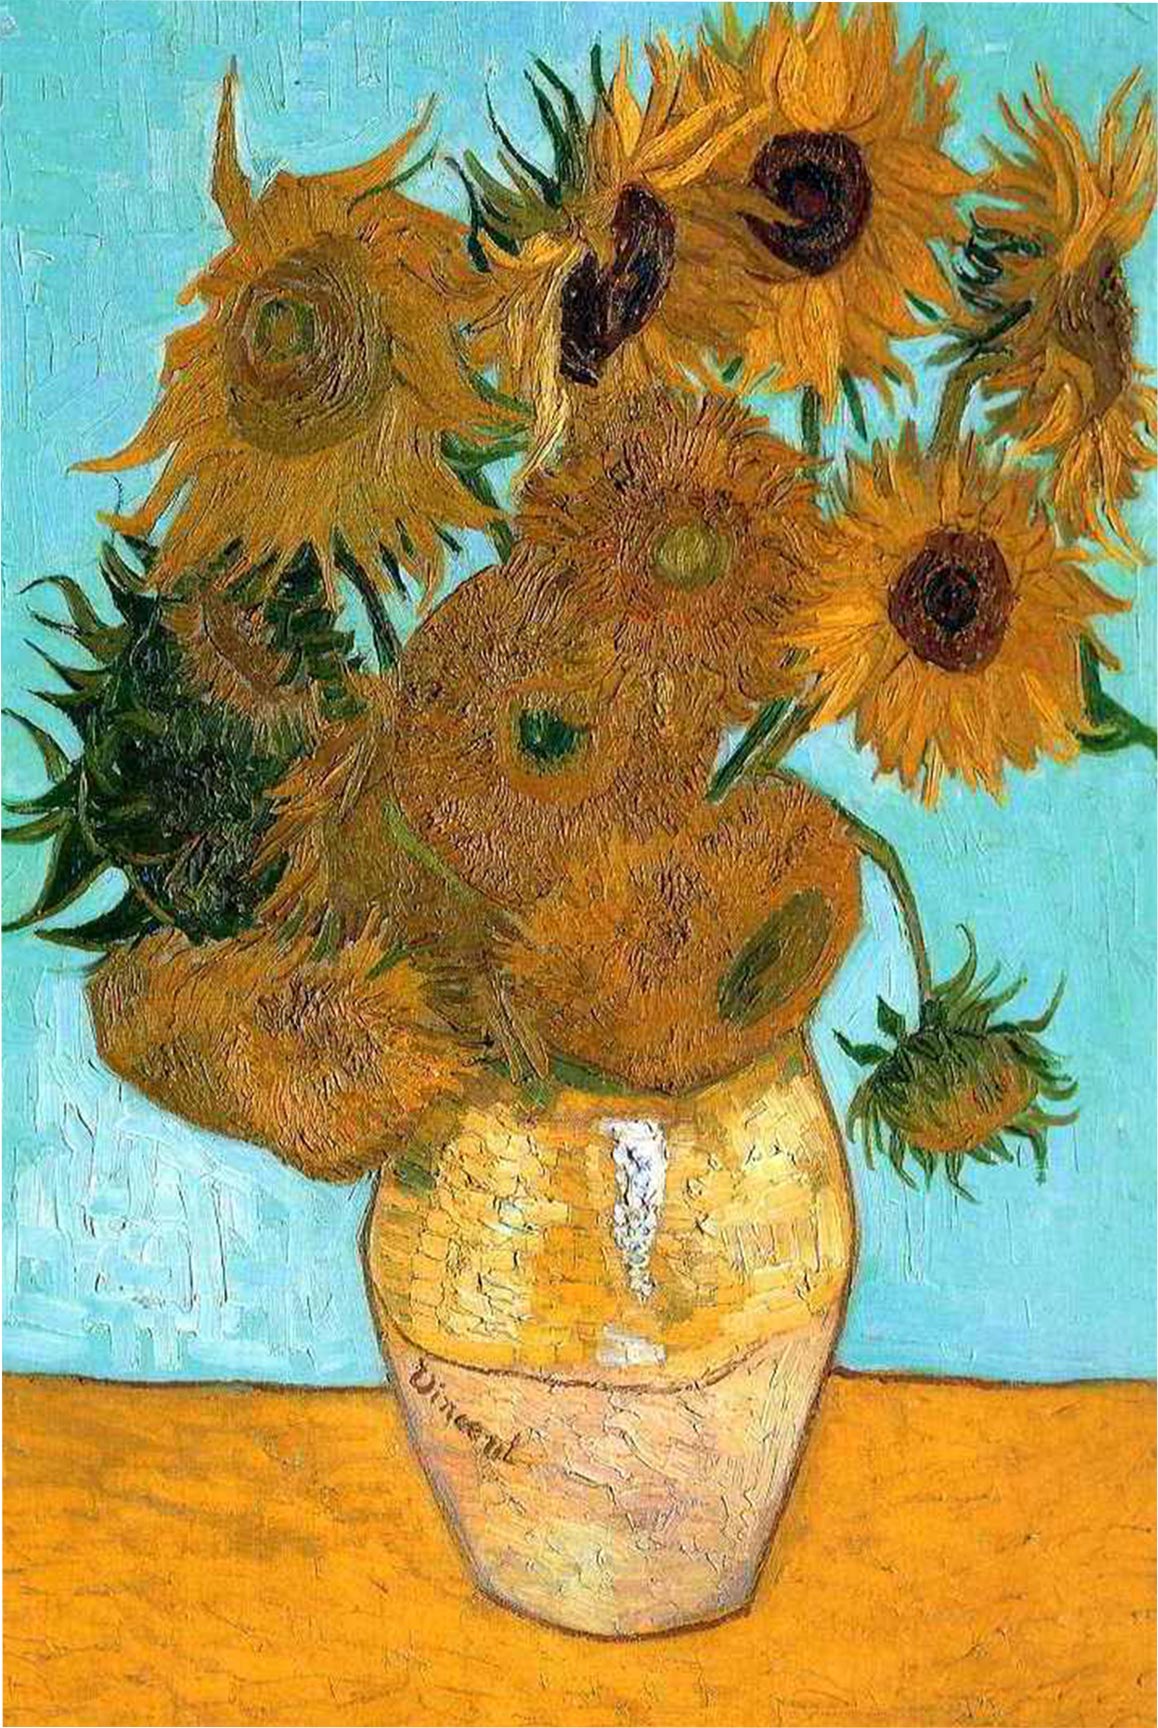 Quadro Retangular  -  Vincent van Gogh - 12 girassóis